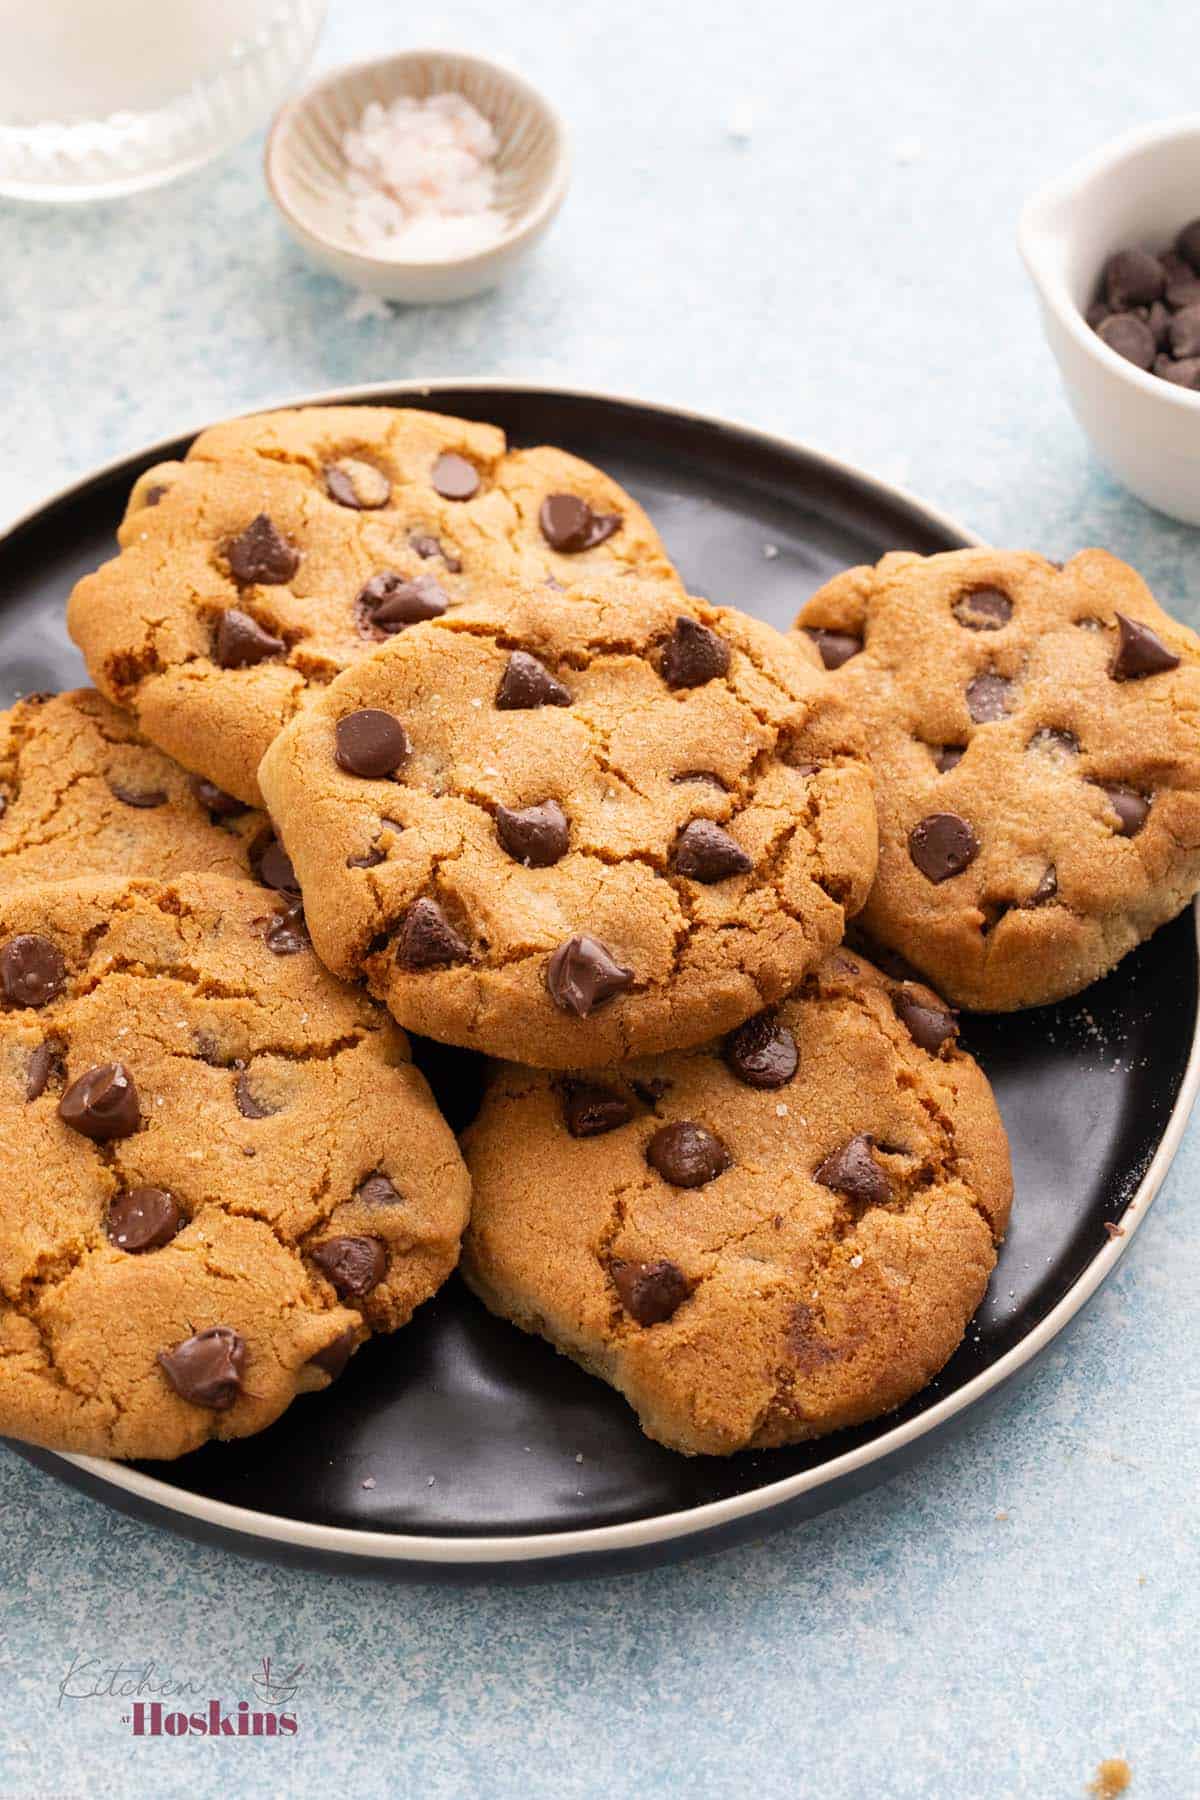 https://www.kitchenathoskins.com/wp-content/uploads/2021/01/air-fryer-cc-cookies-16.jpg